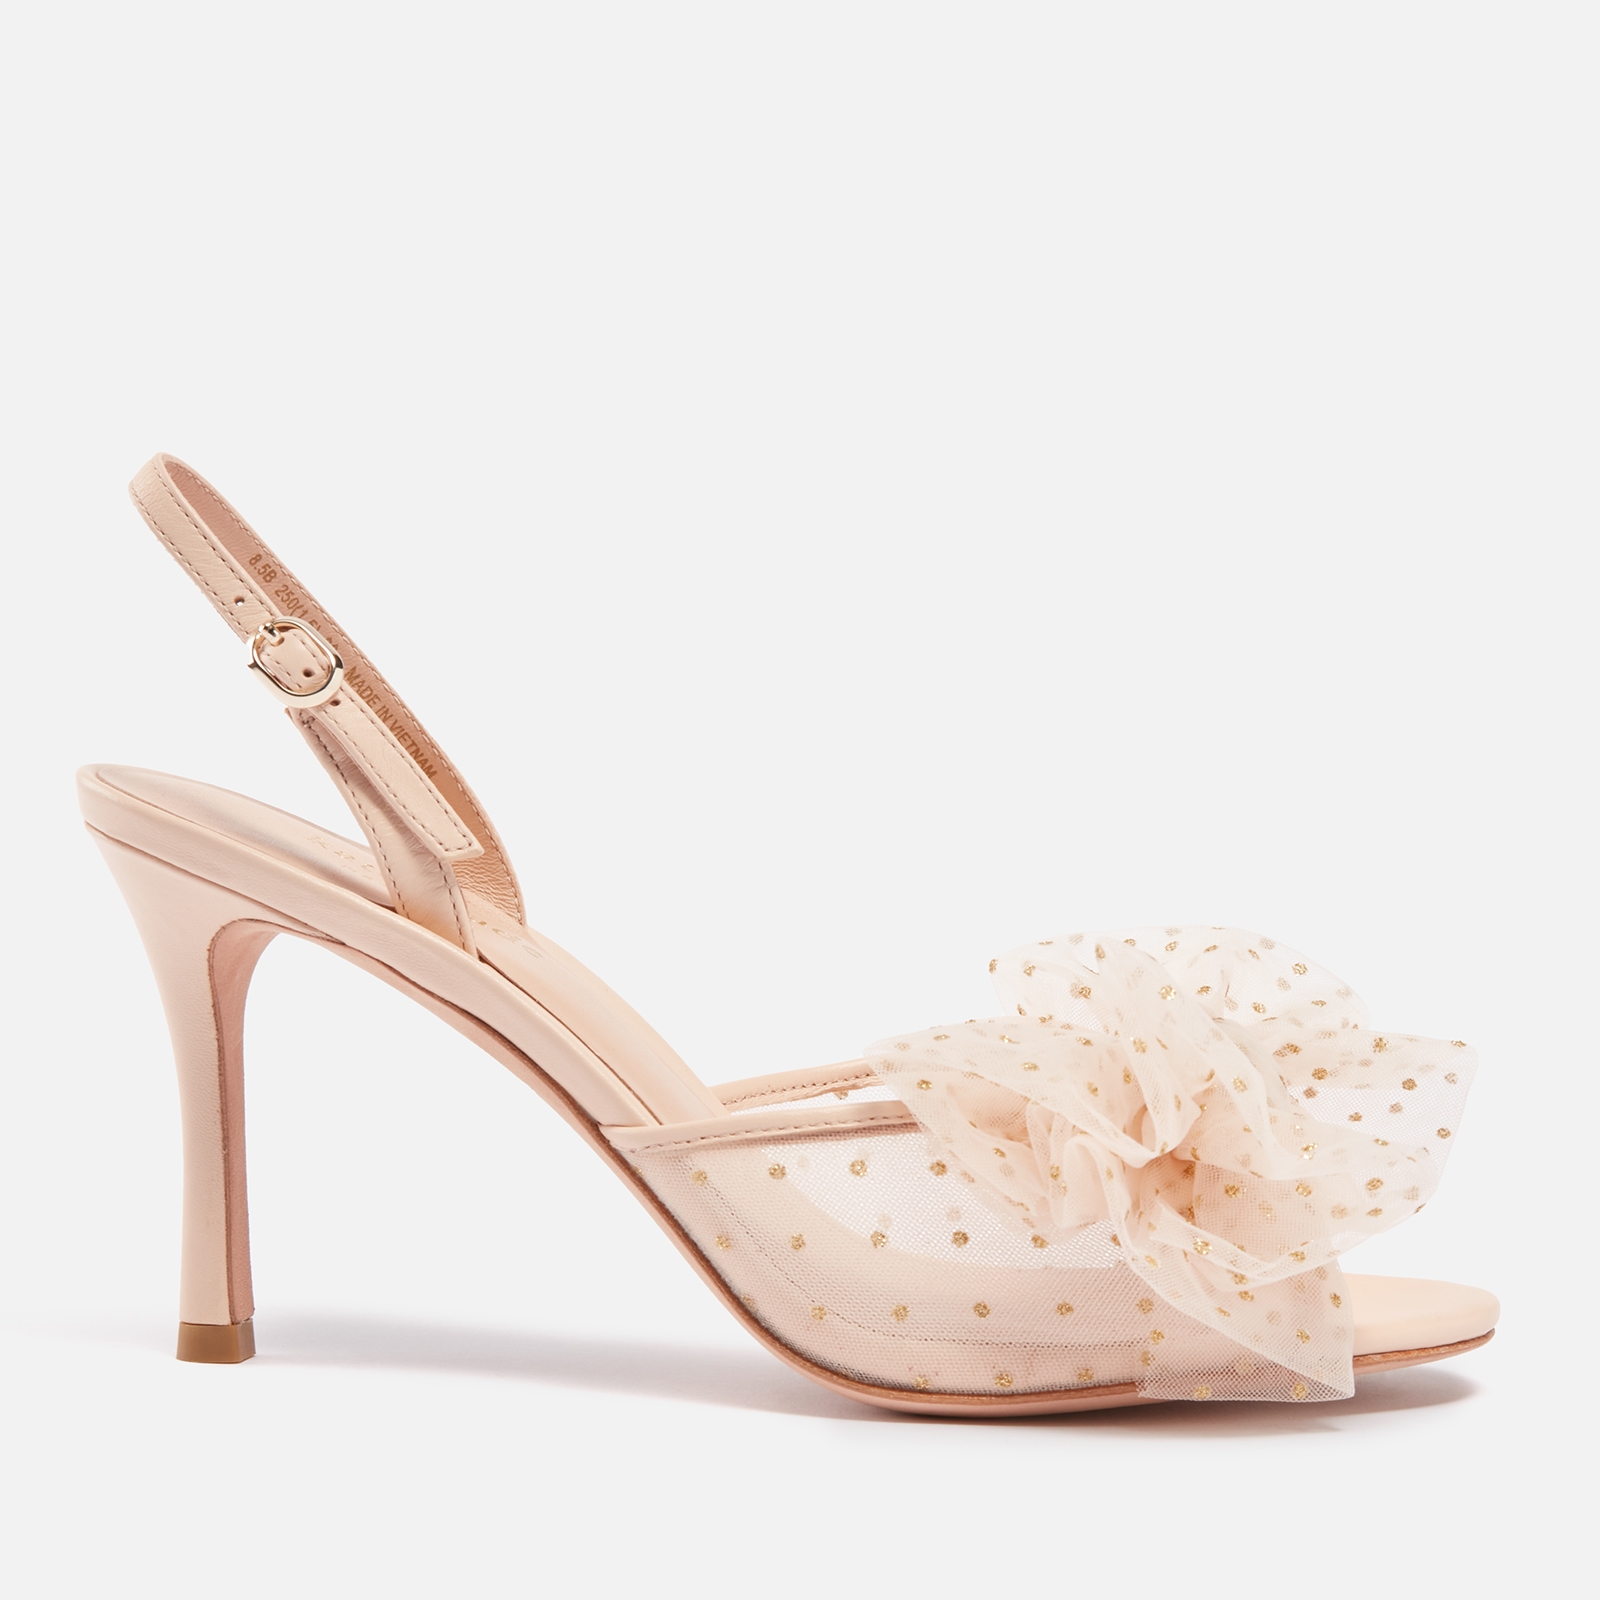 Kate Spade New York Women’s Bridal Sparkle Heeled Sandals